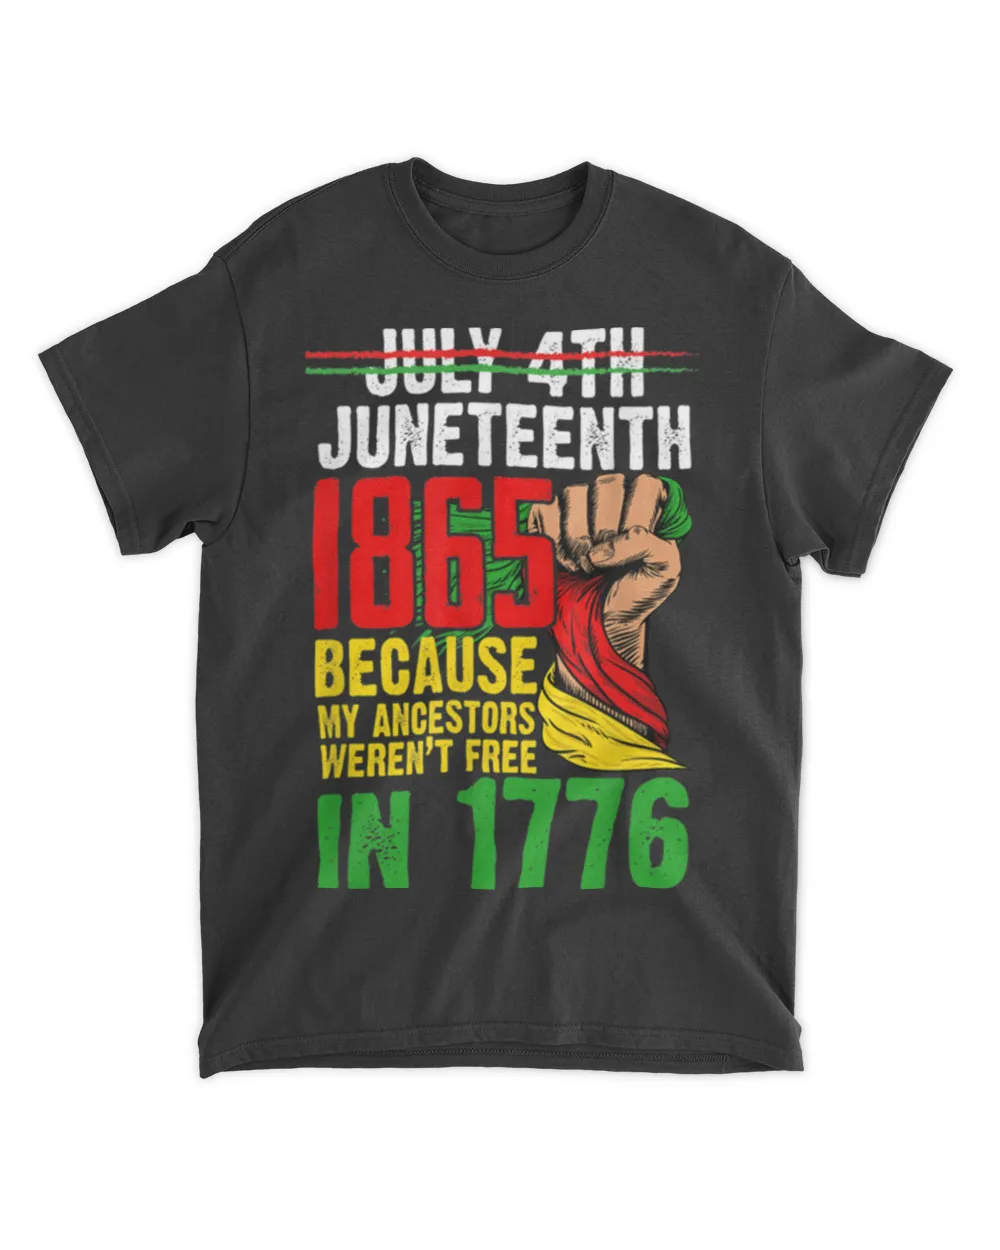 July 4th Juneteenth 1865 Because My Ancestors T Shirt tee